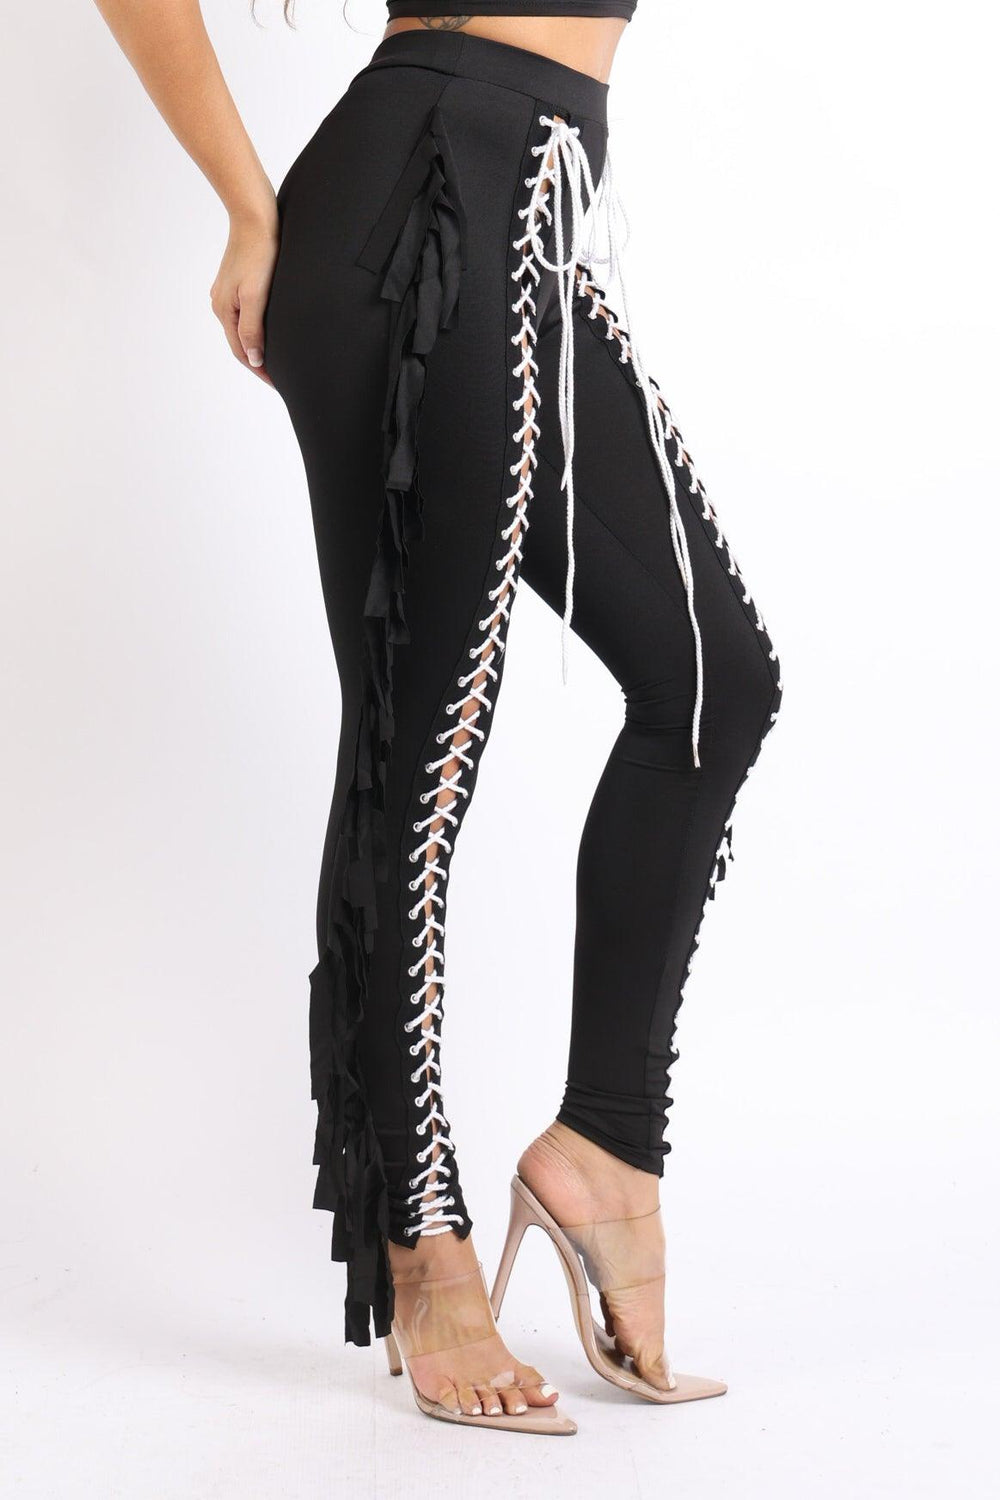 Chic Lace up Detailed Fringe Tassel Pants Leggings BLACK - Brand My Case